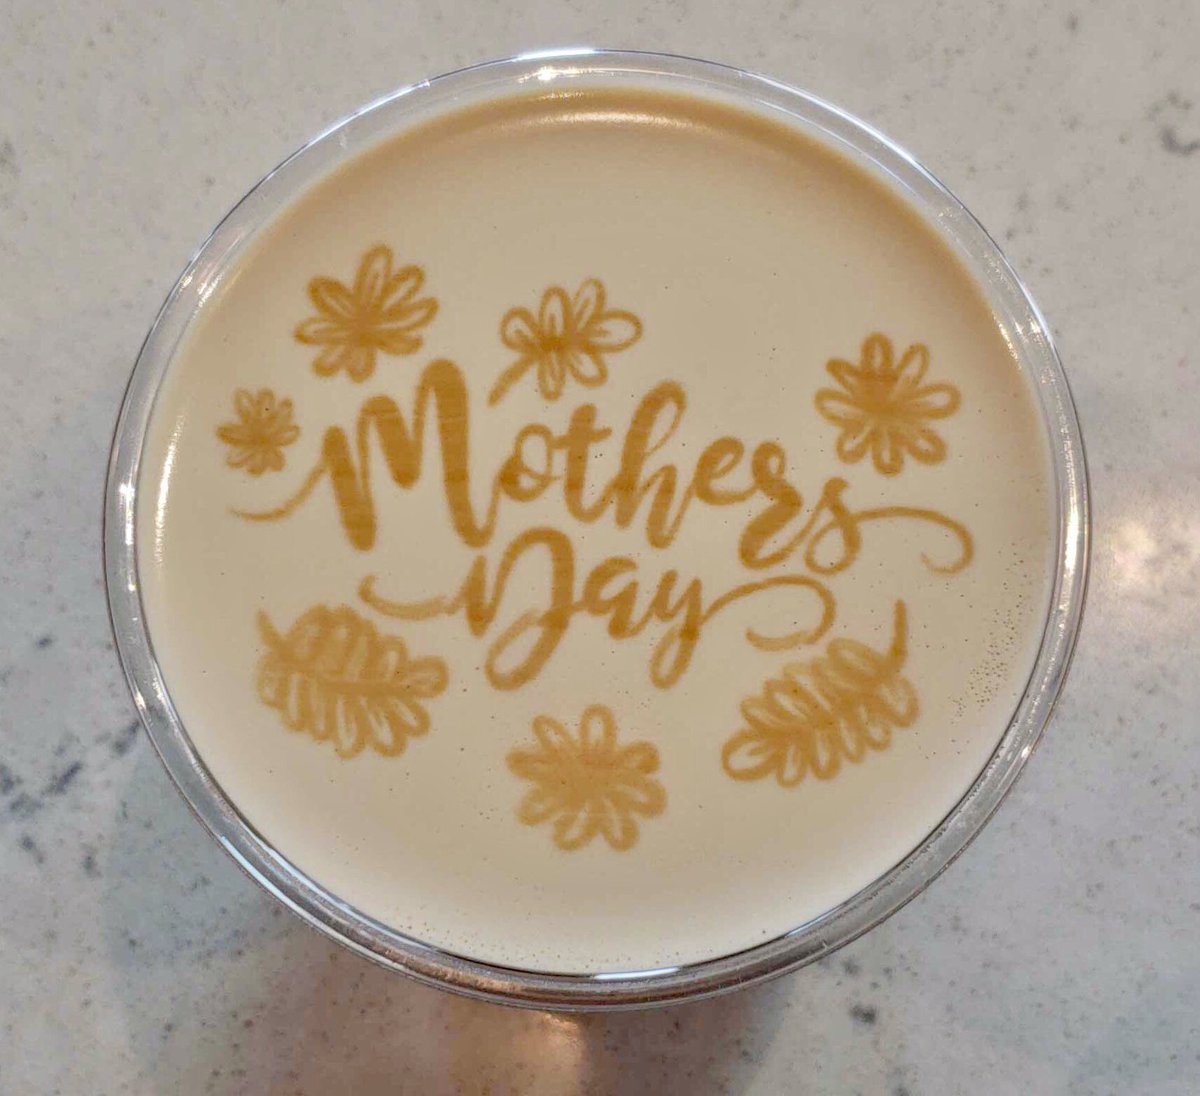 Joffrey’s Coffee in Disney Springs Debuts Mother’s Day Latte Art